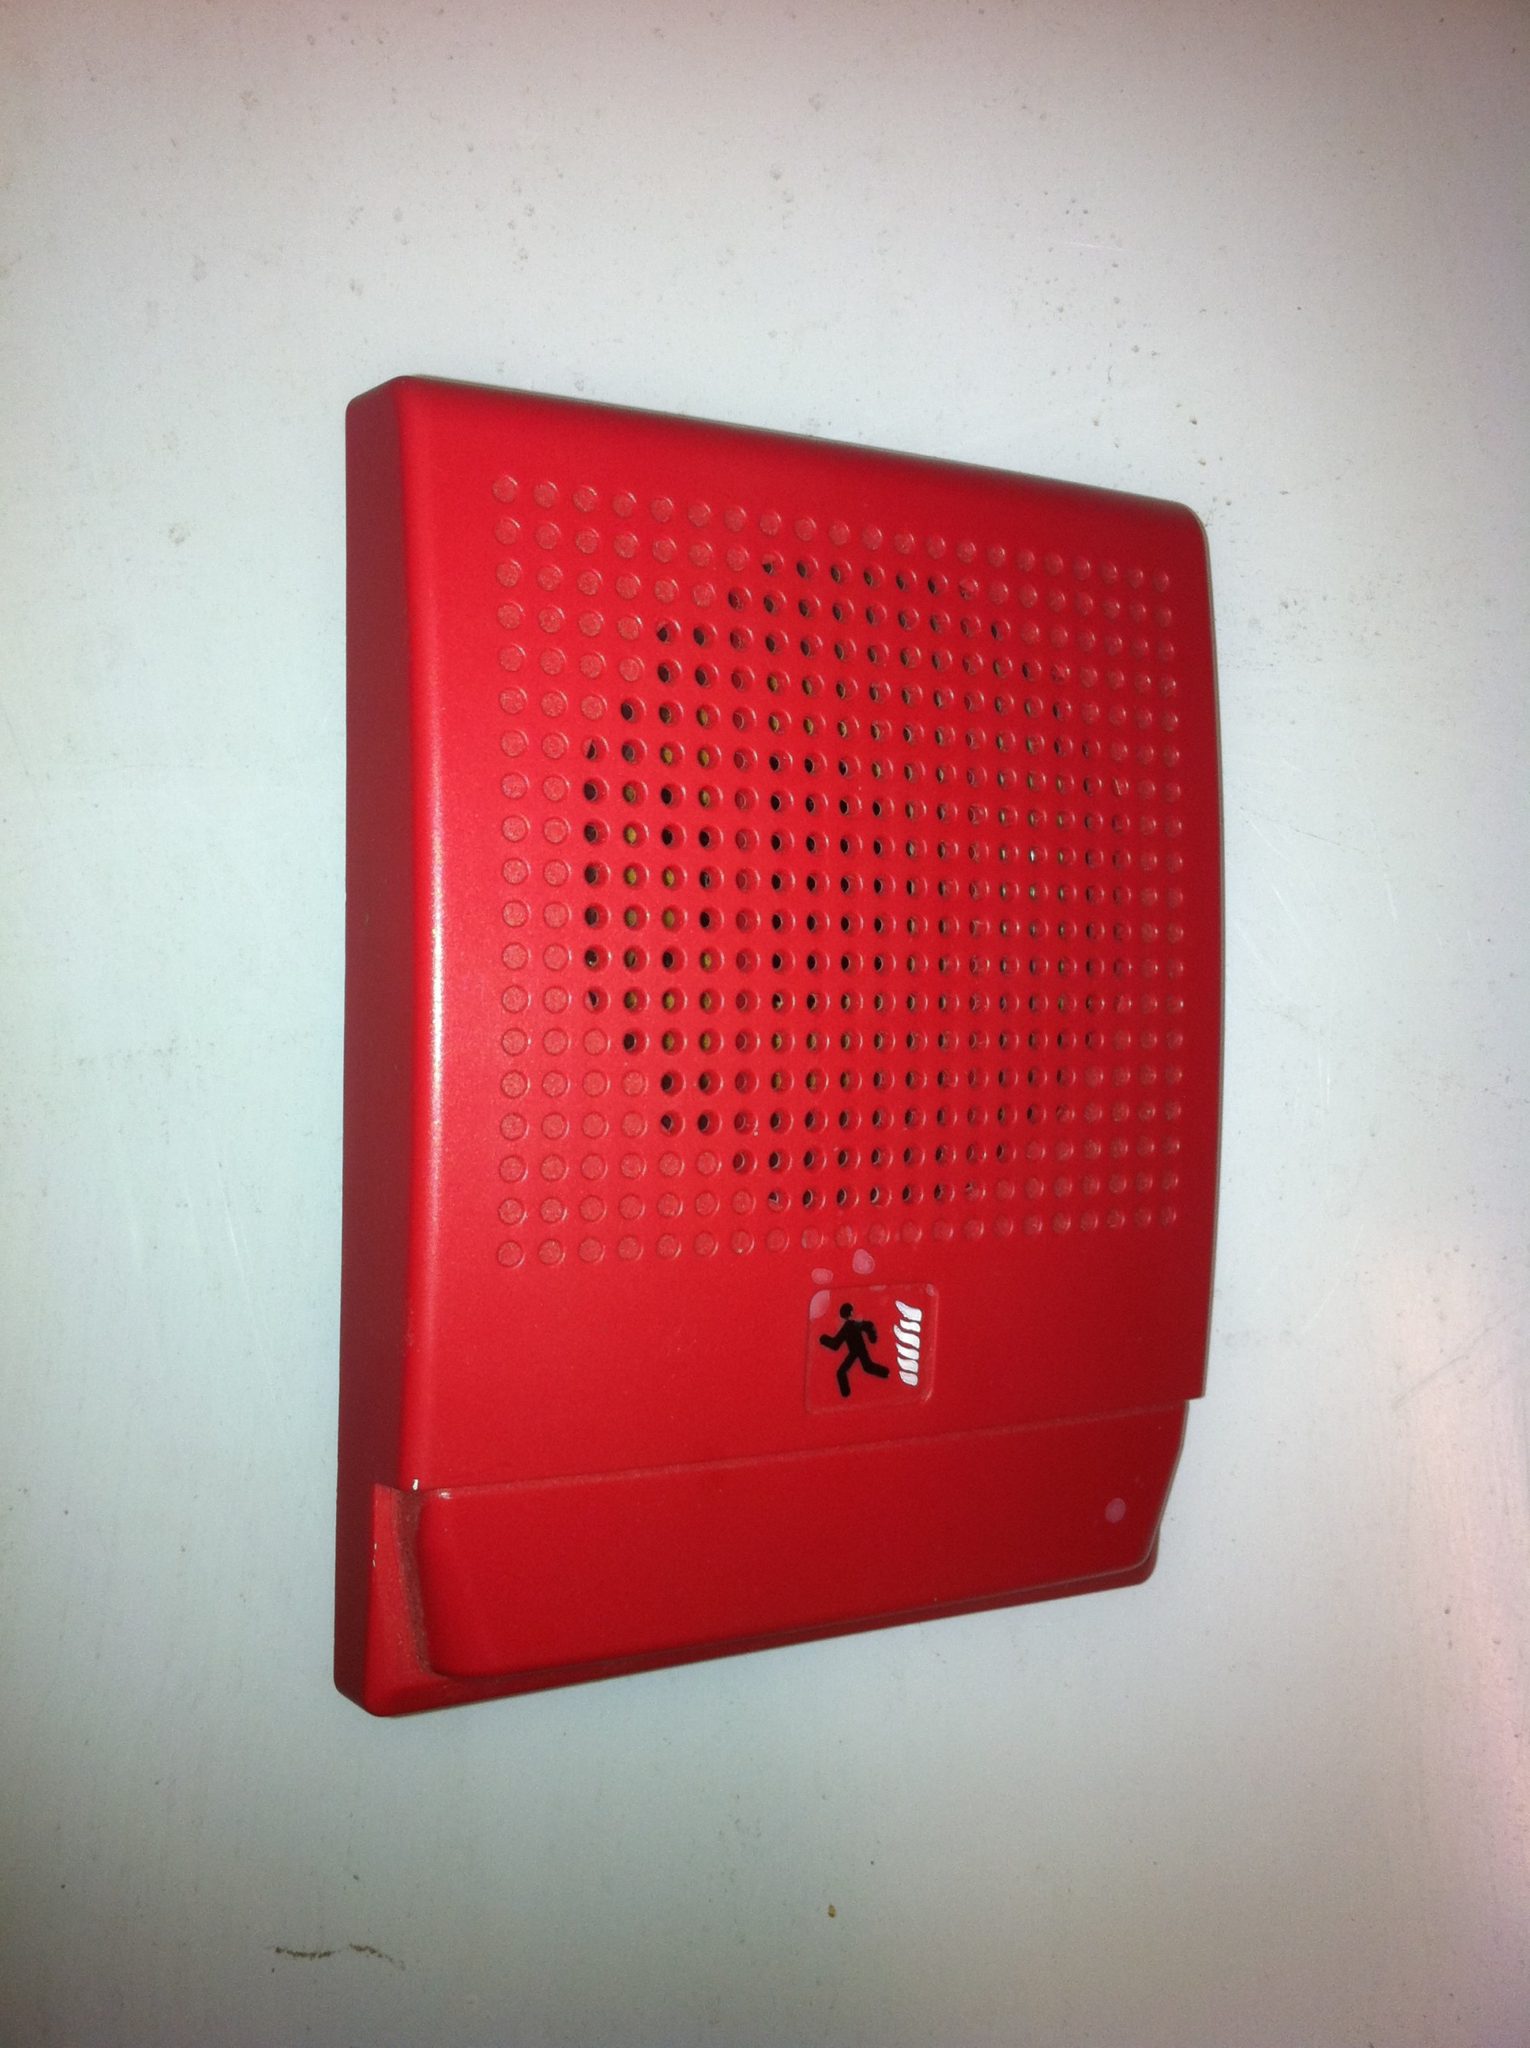 Red Intercom - mounted